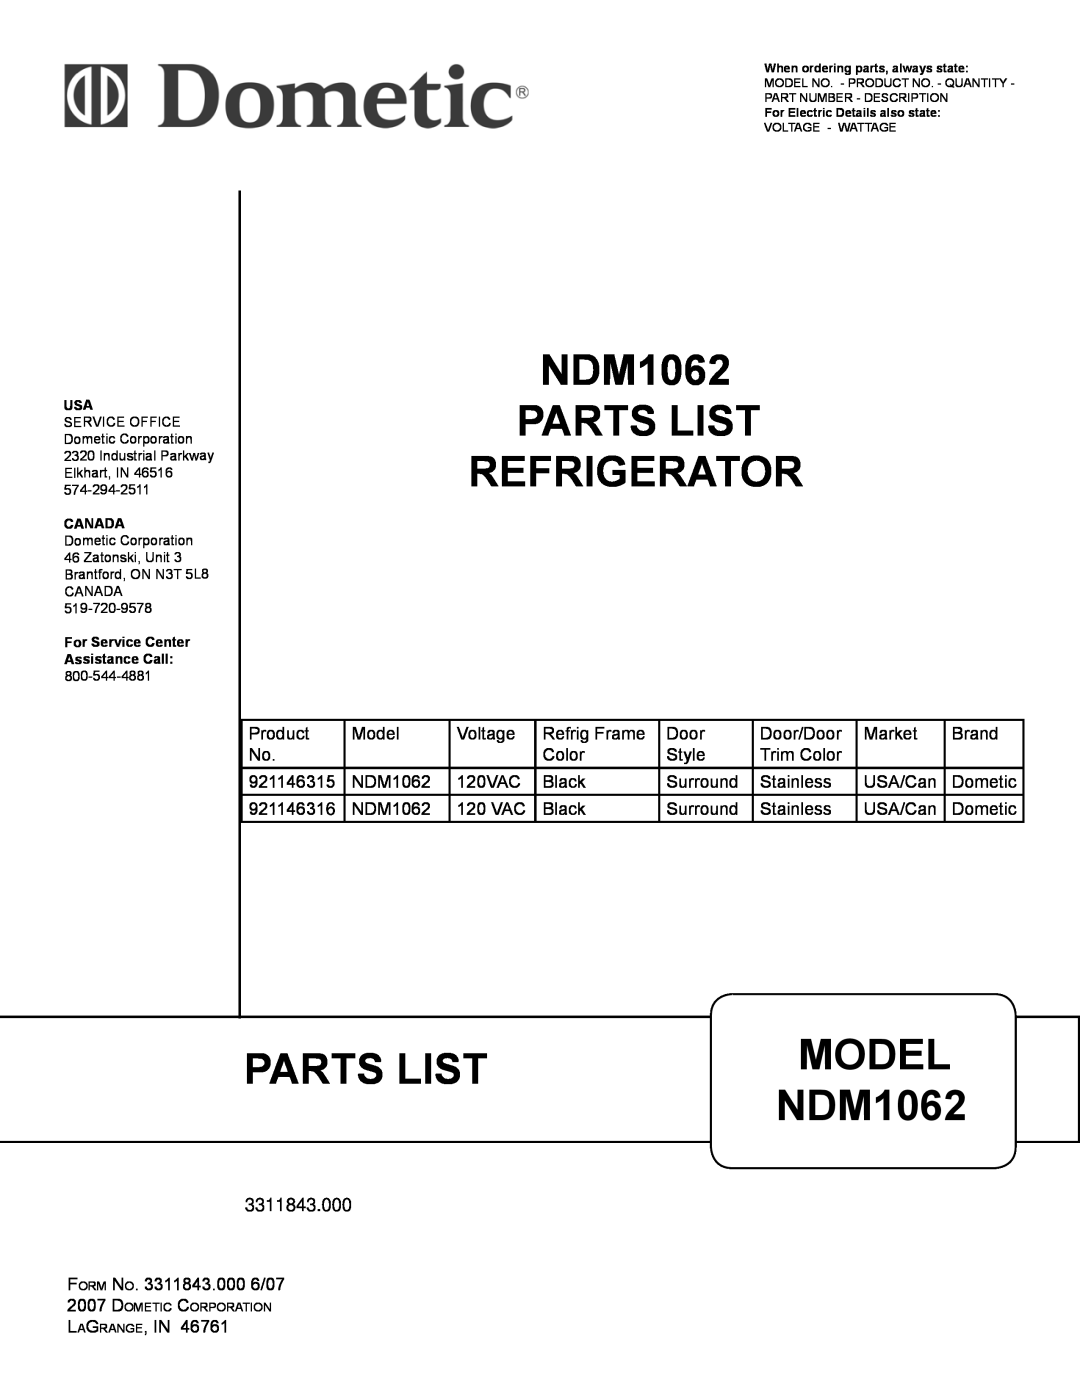 Dometic manual NDM1062 PARTS LIST REFRIGERATOR, Parts List, Model 